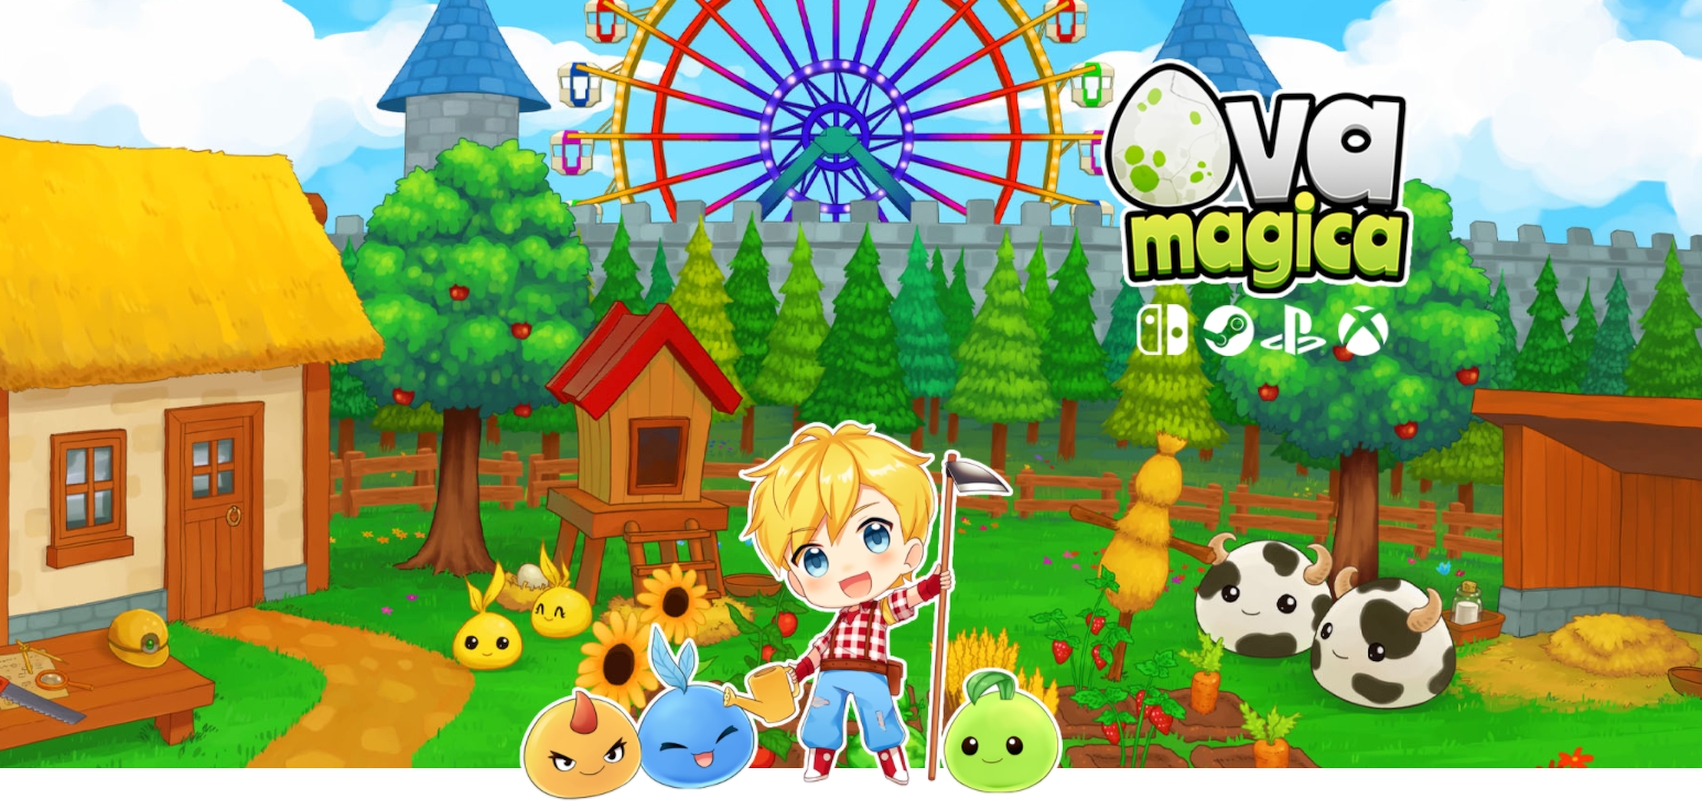 Farming And Monster Raising Sim Ova Magica Now Available For Funding Through Kickstarter